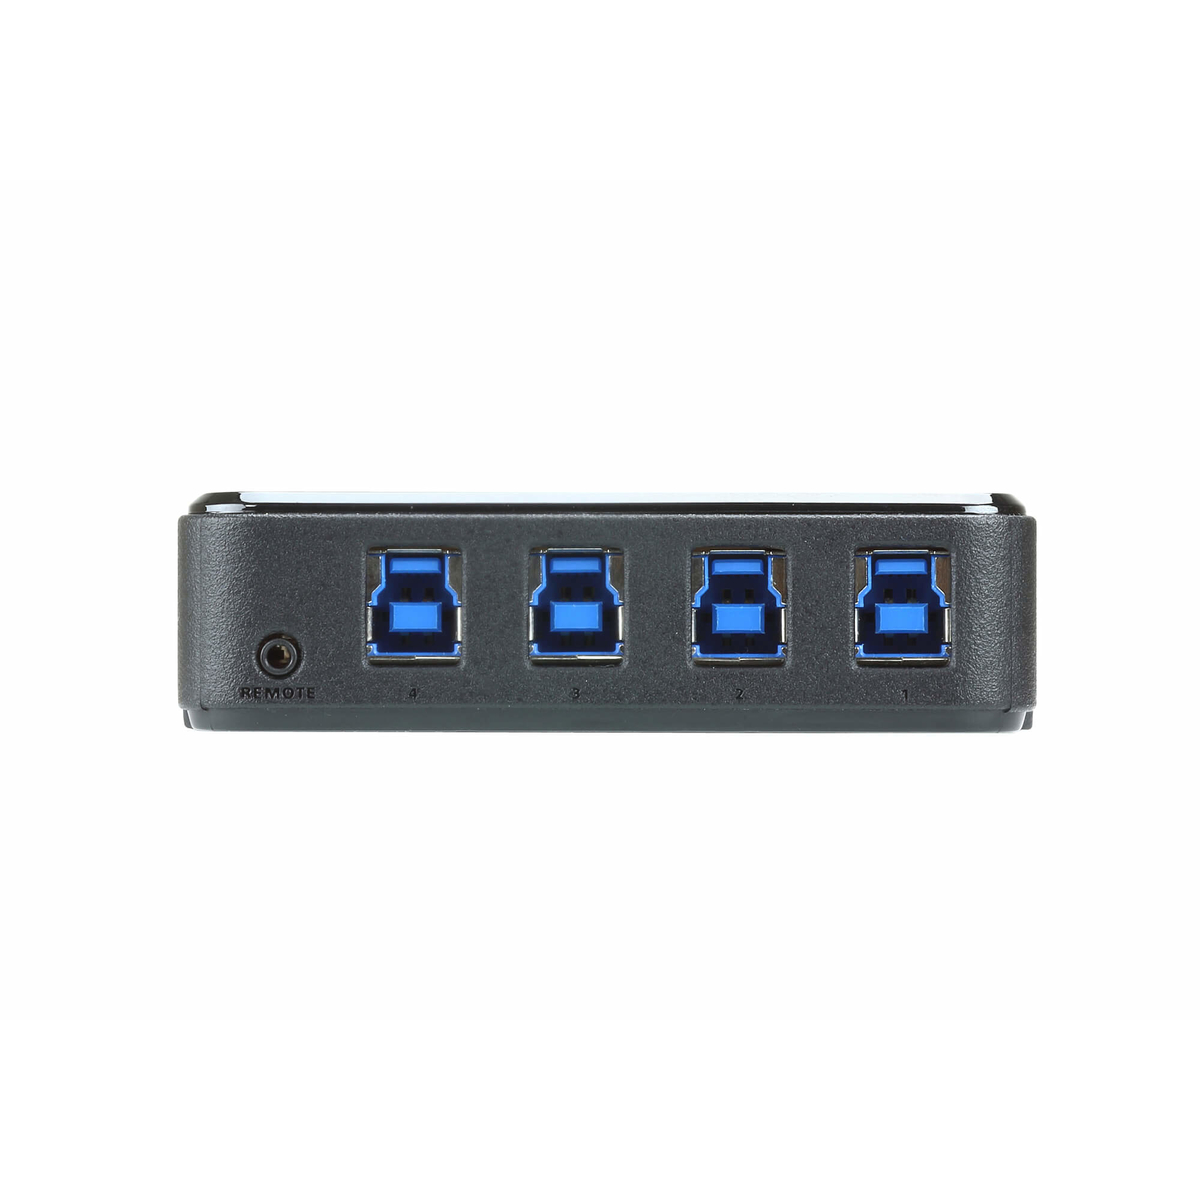 4x4 USB3.1Gen1 Peripheral Sharing Switch